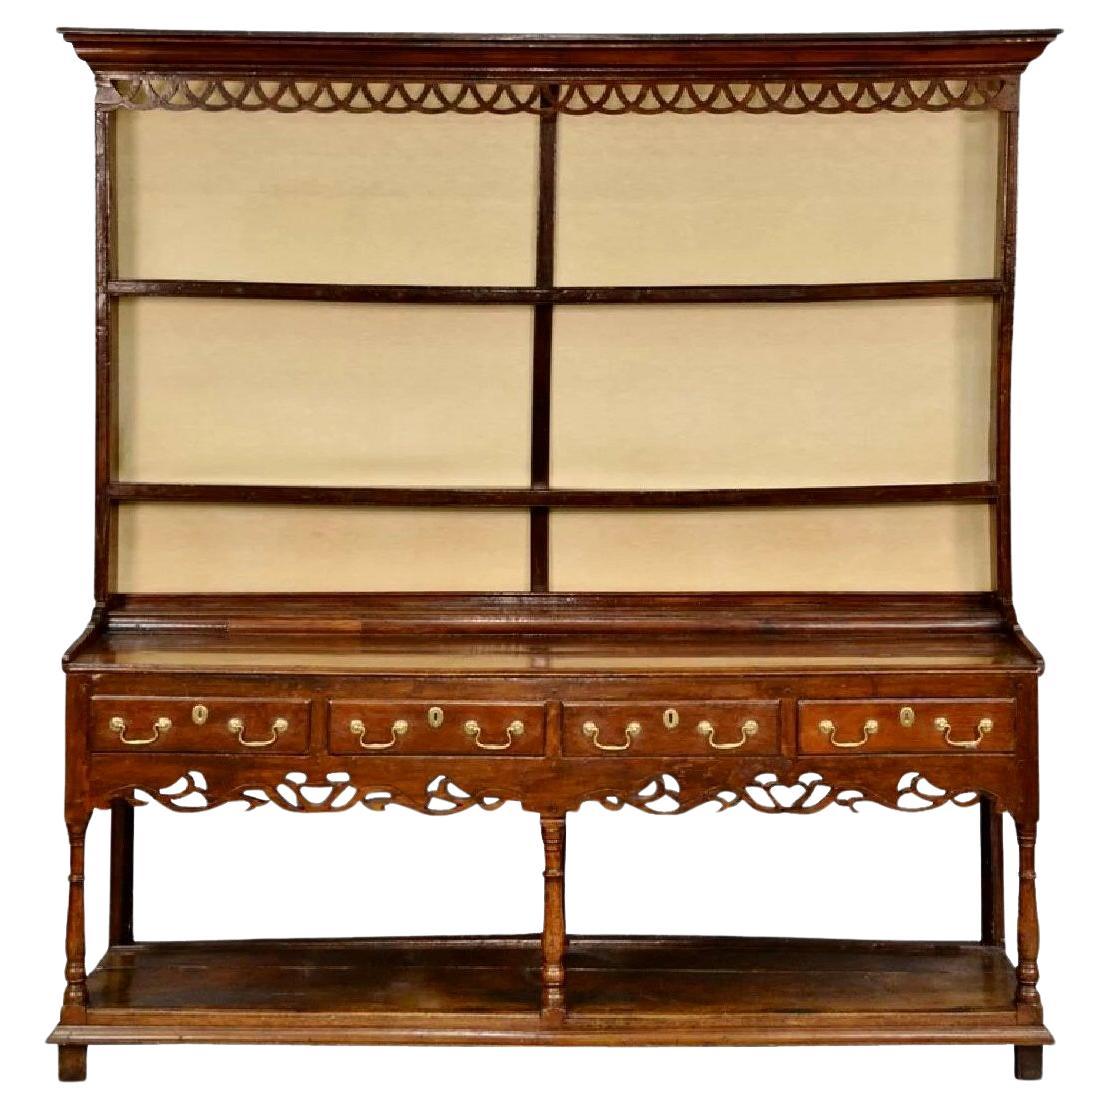 George II Period Welsh Dresser, 18th Century